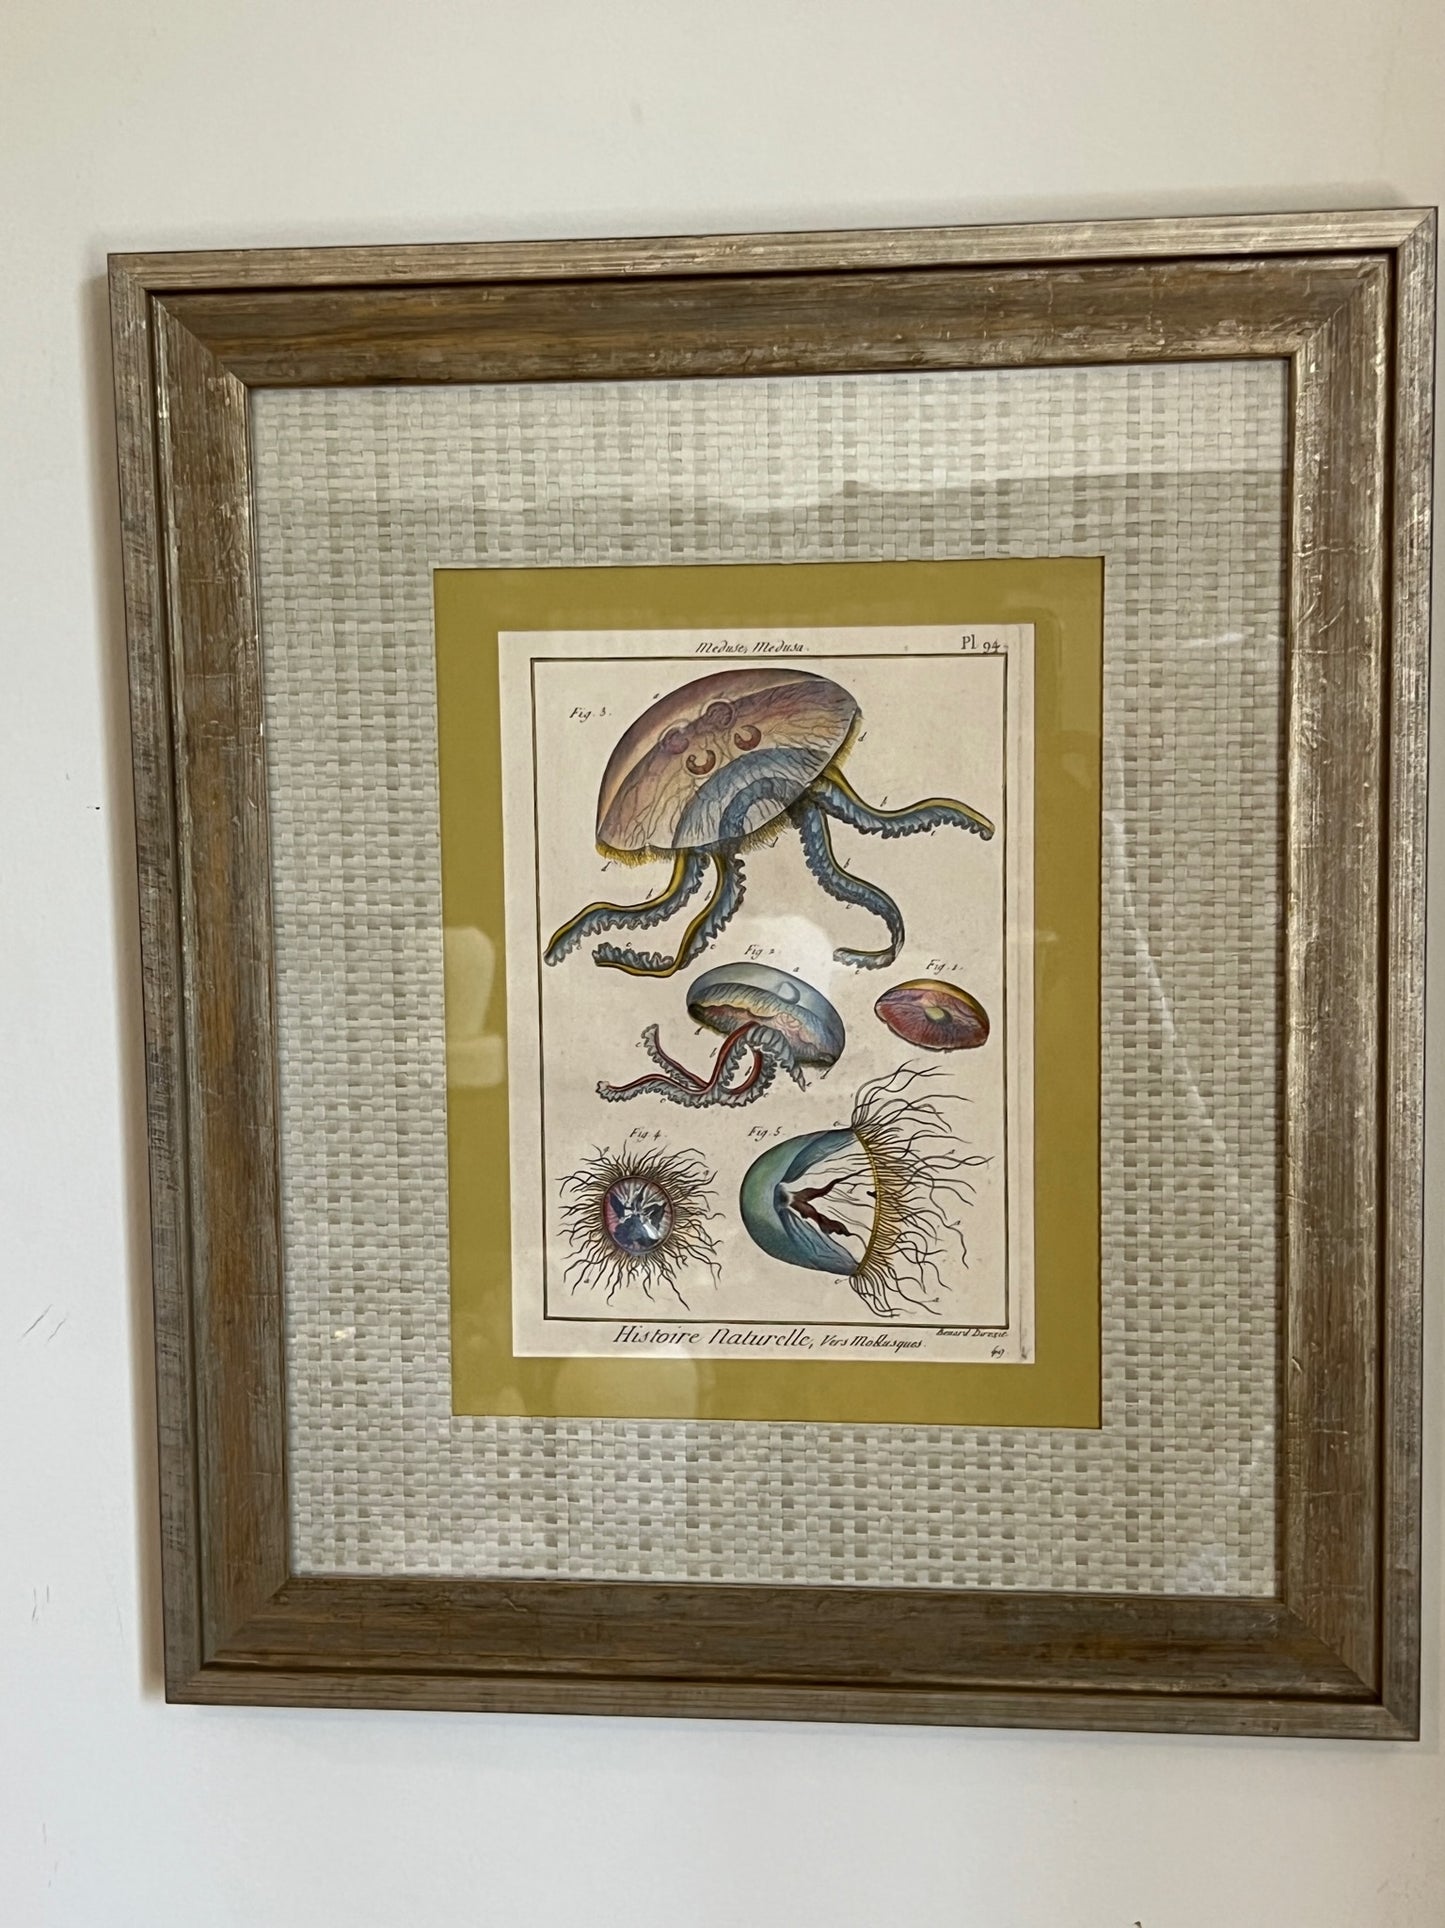 "Meduse, Medusa - PL 94" Colored Lithograph